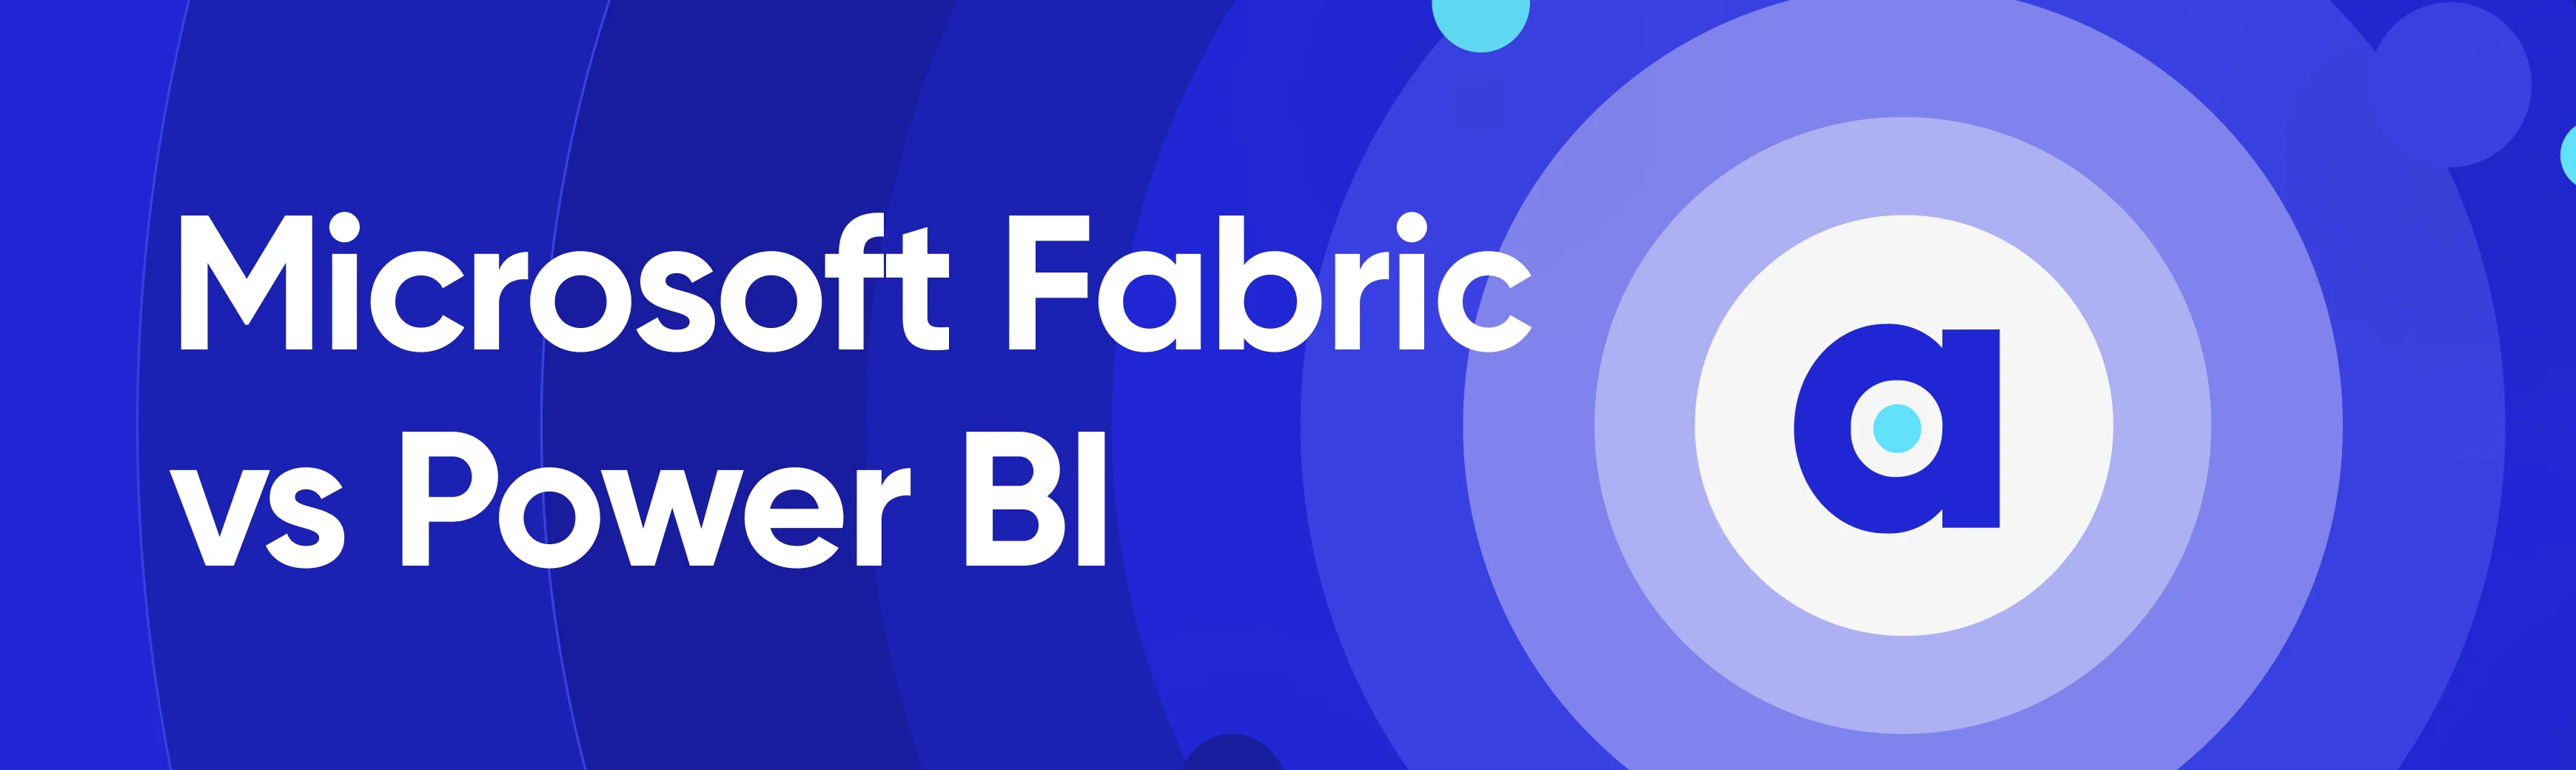 Microsoft fabric vs Power BI